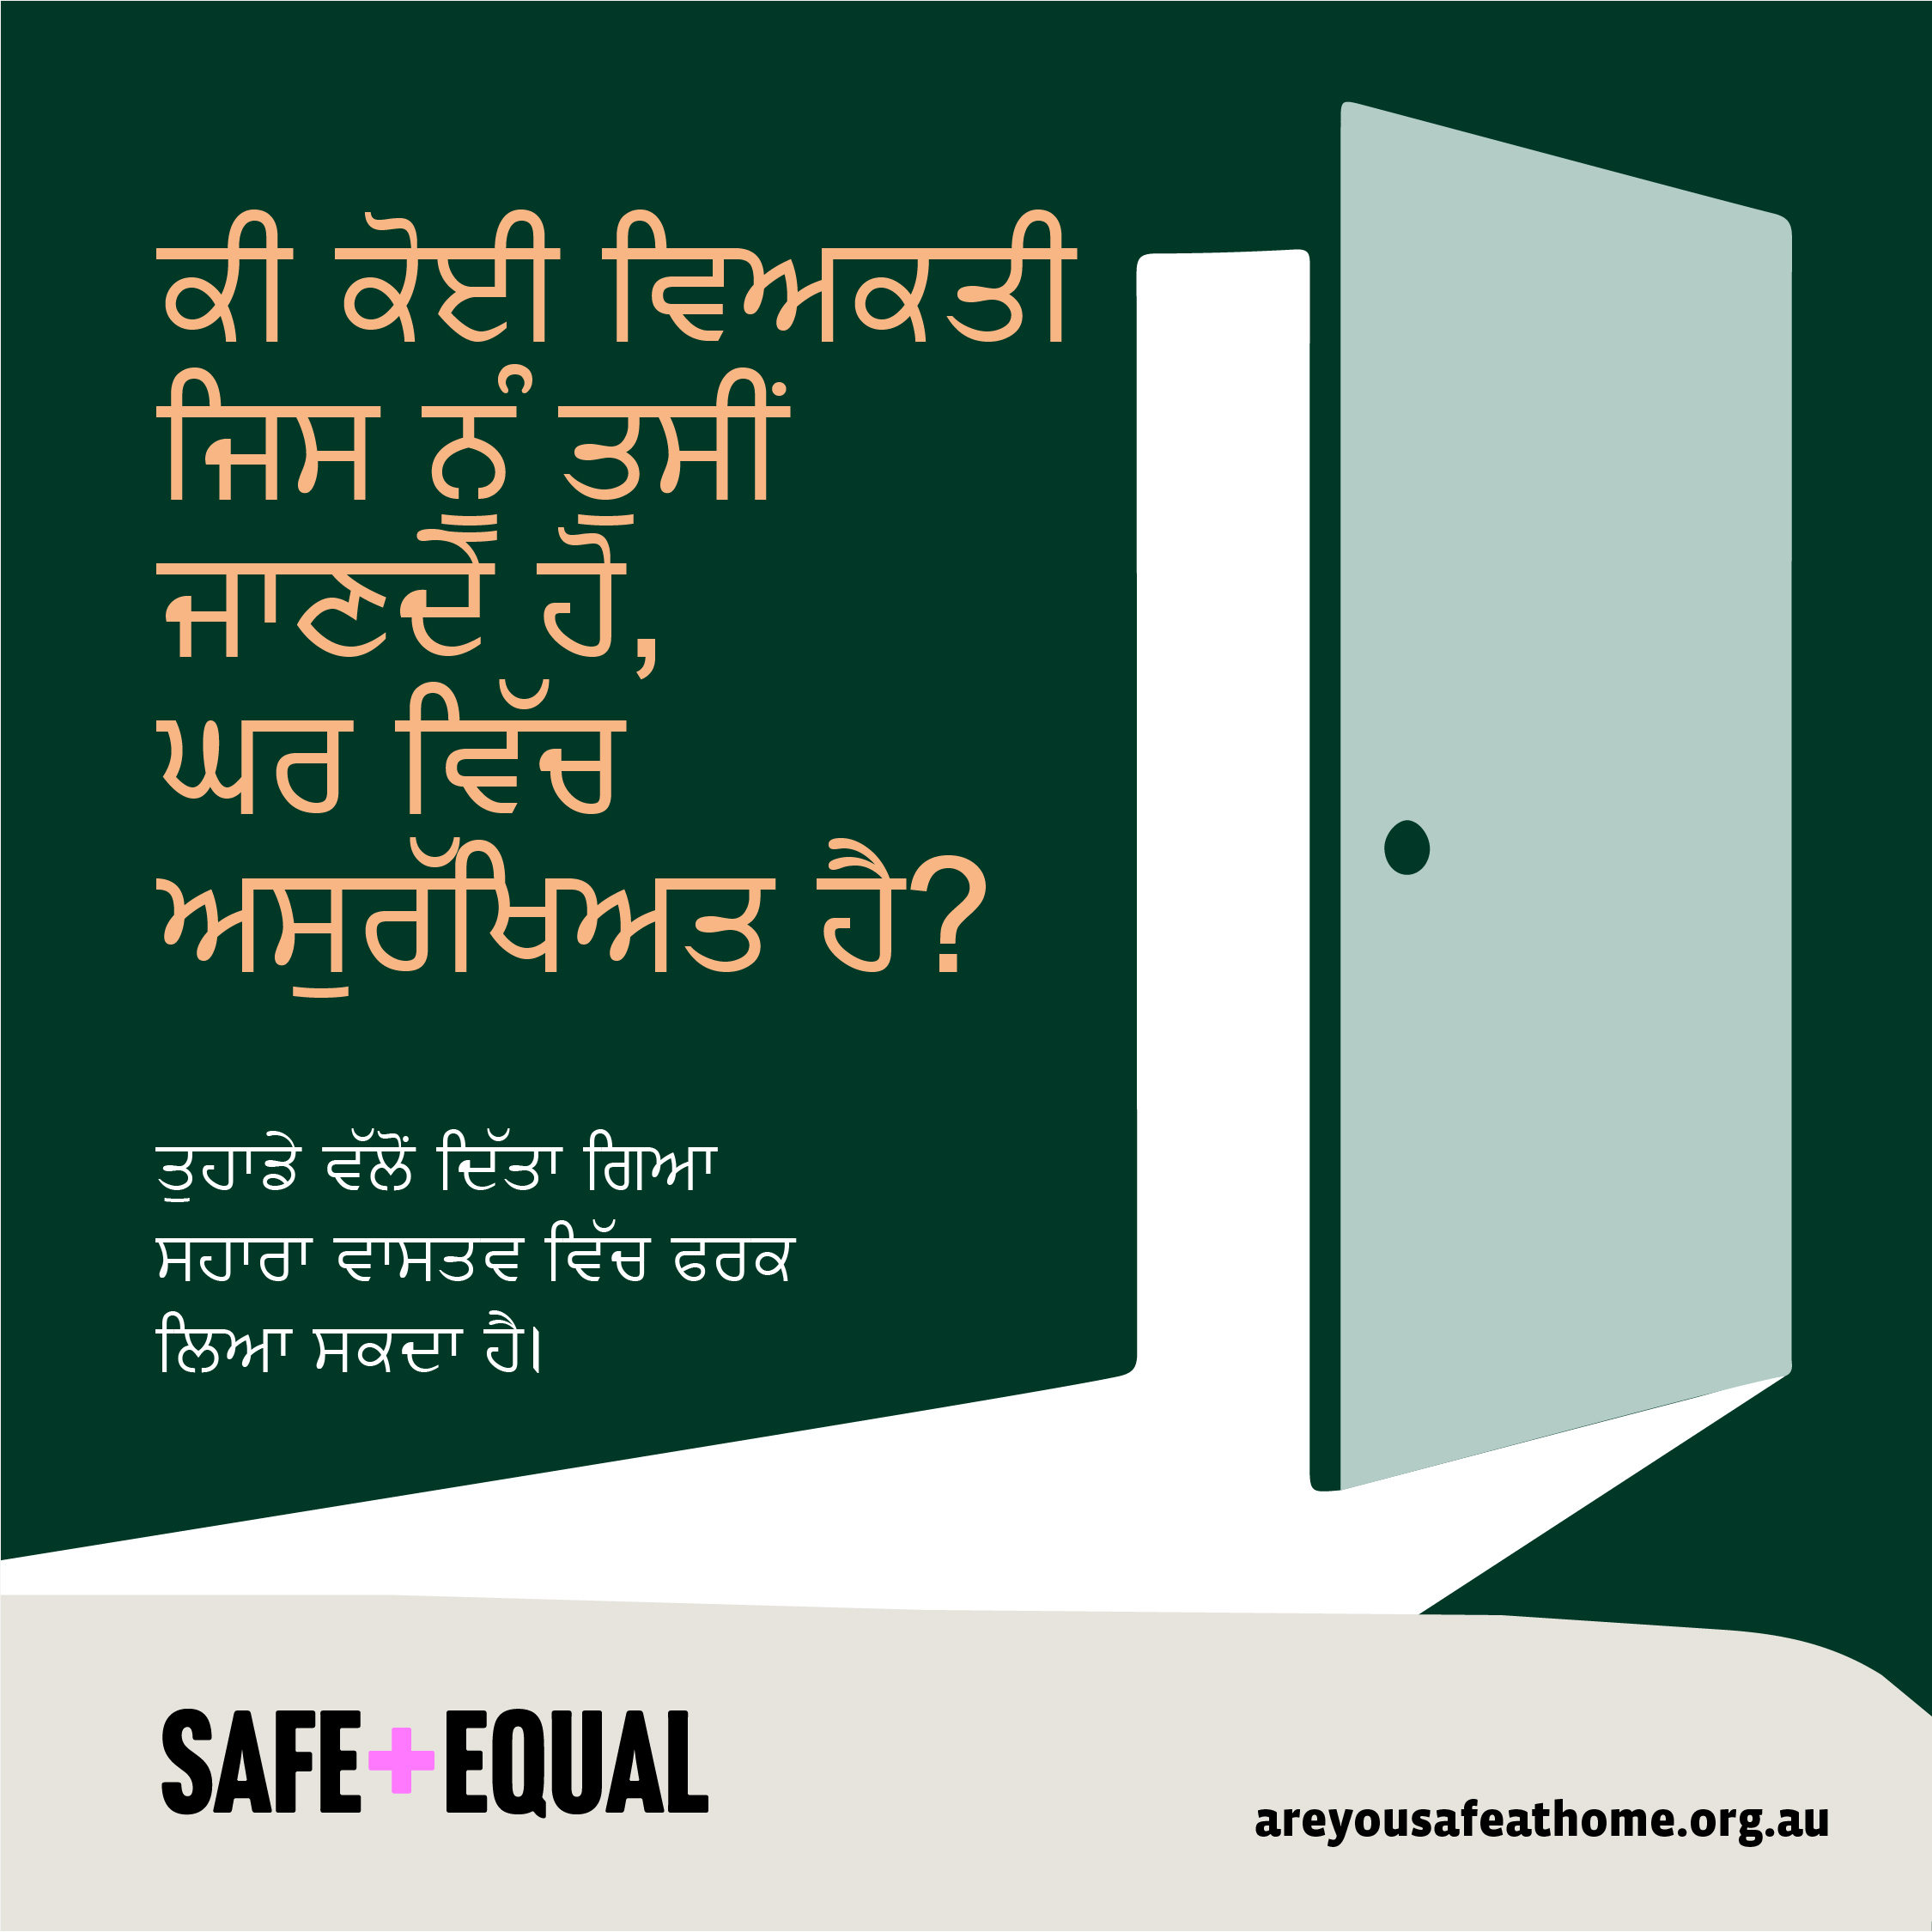 Social media tile for Are you safe at home translated into Punjabi